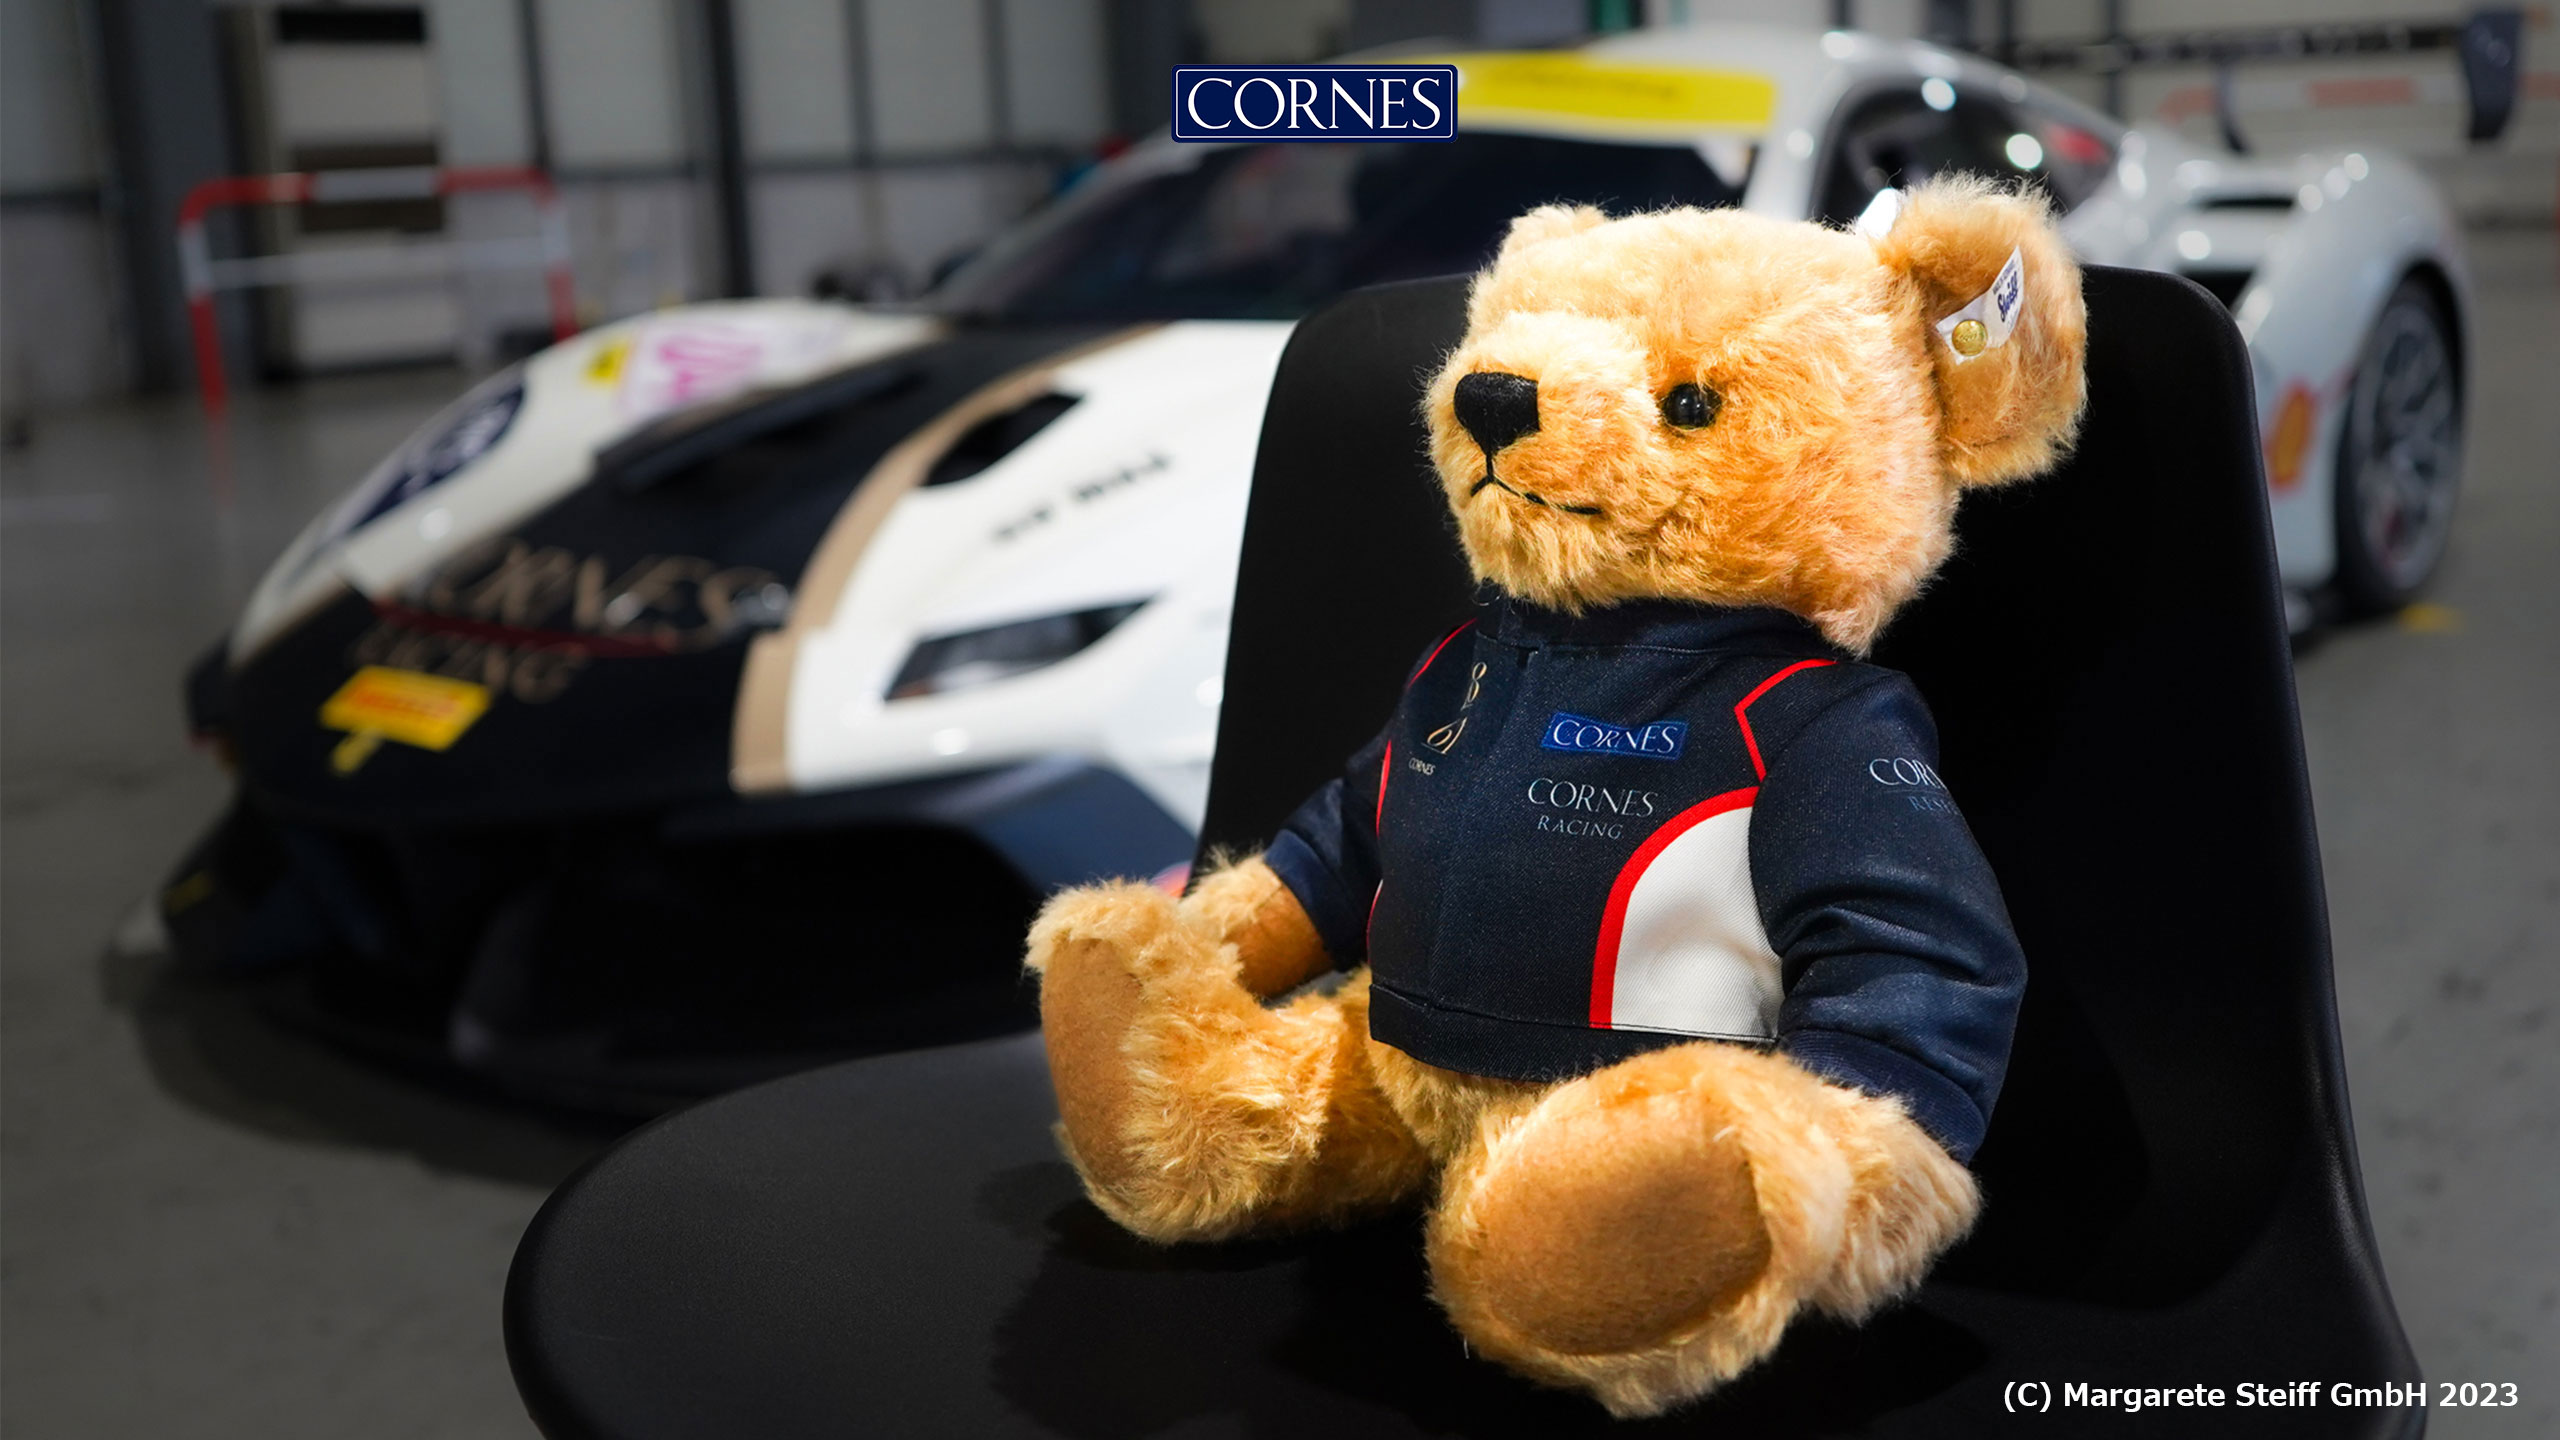 CORNES RACING×Steiff（シュタイフ）コラボ「Racing Tedy Bear」を発売